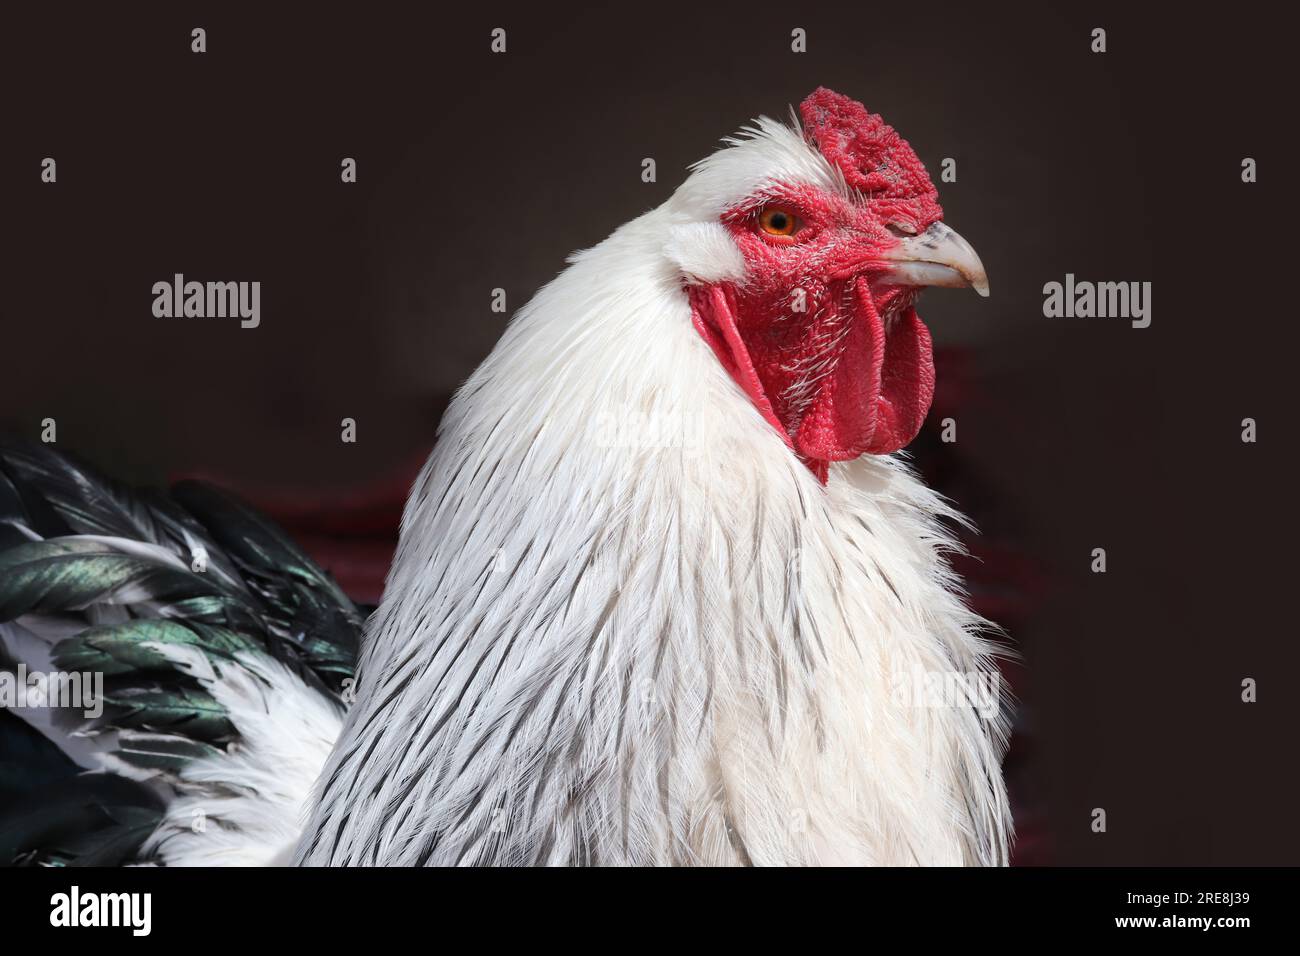 Brahma chicken at an organic sustainable farm Stock Photo